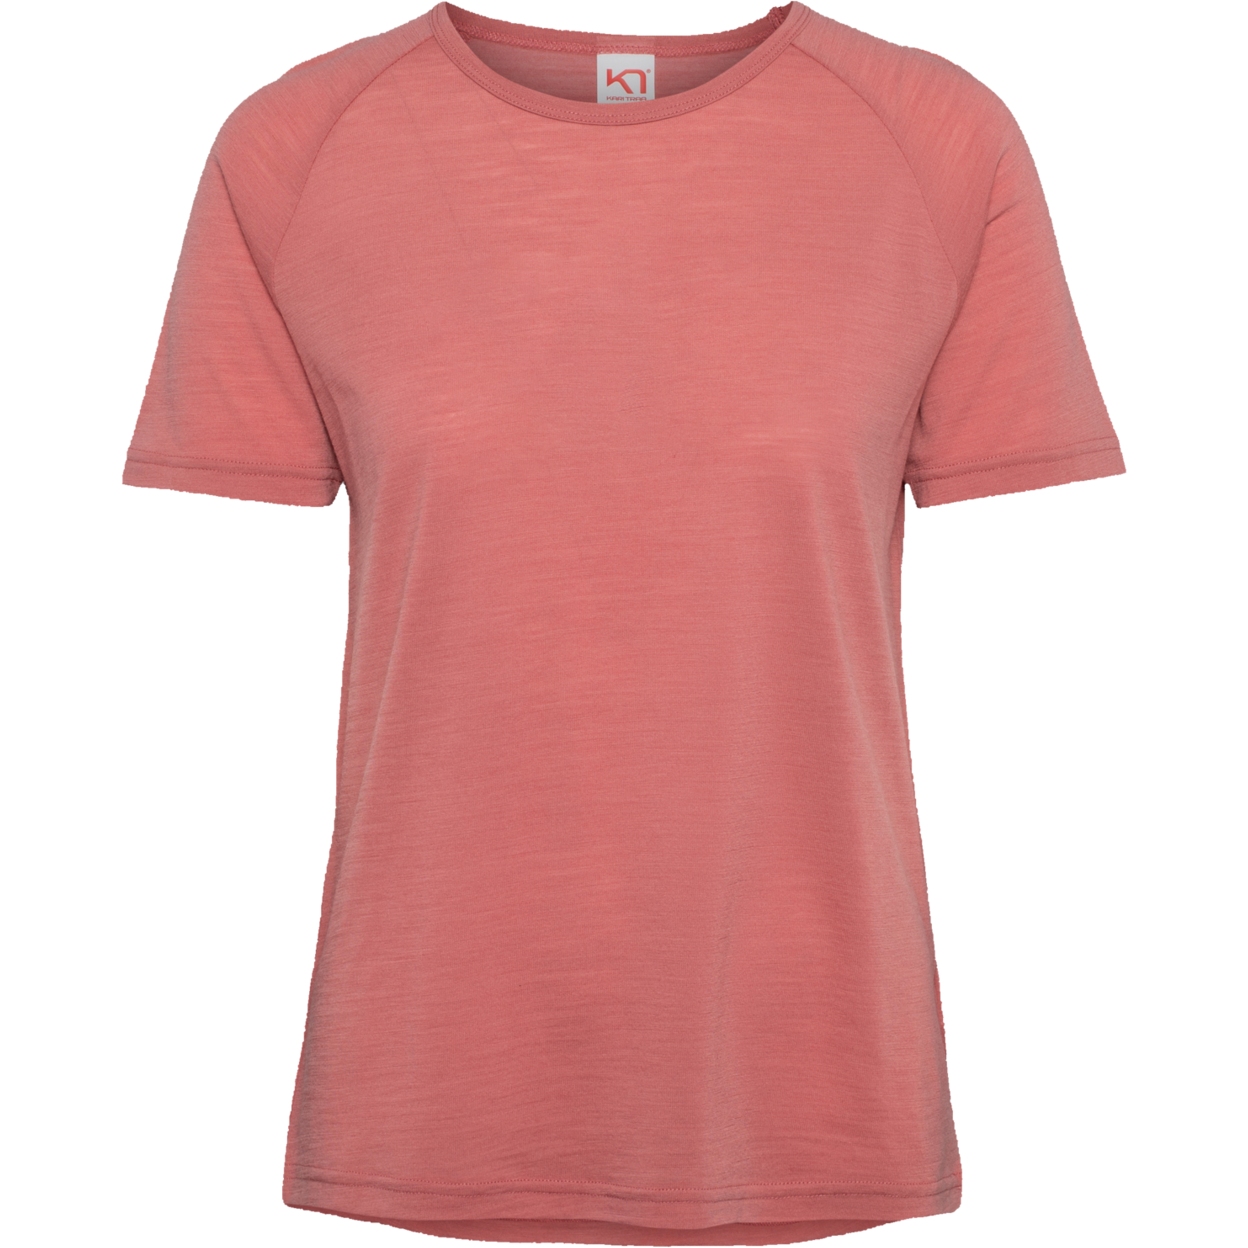 Kari Traa Sanne Wool T-Shirt Women - dark dusty orange pink